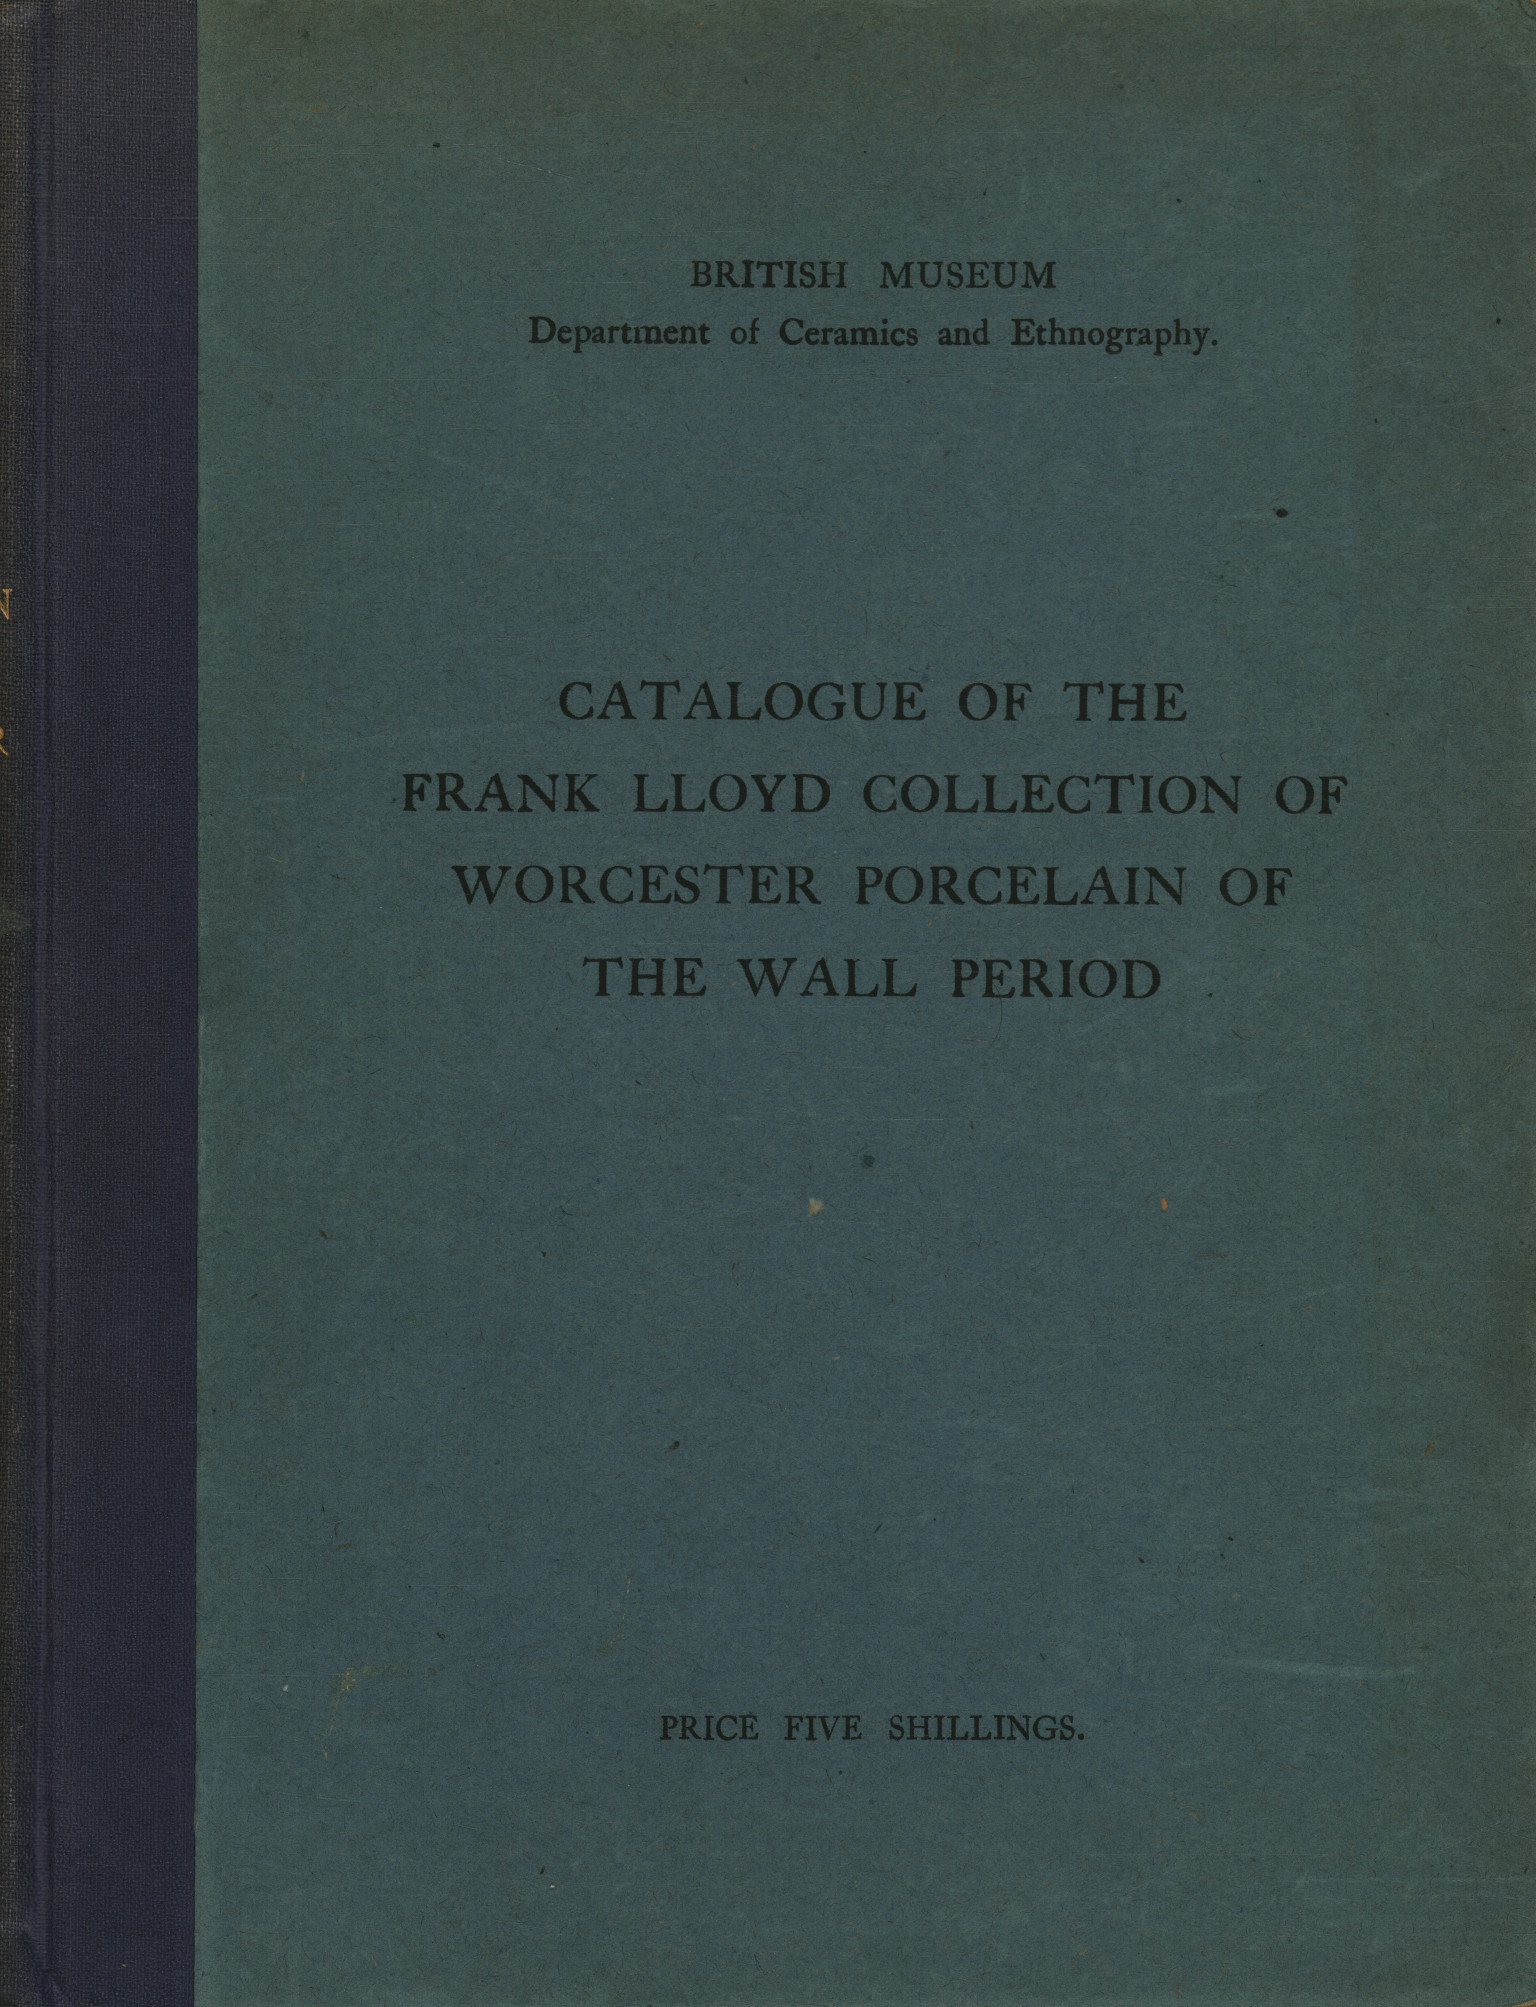 Katalog der Frank Lloyd Collection%